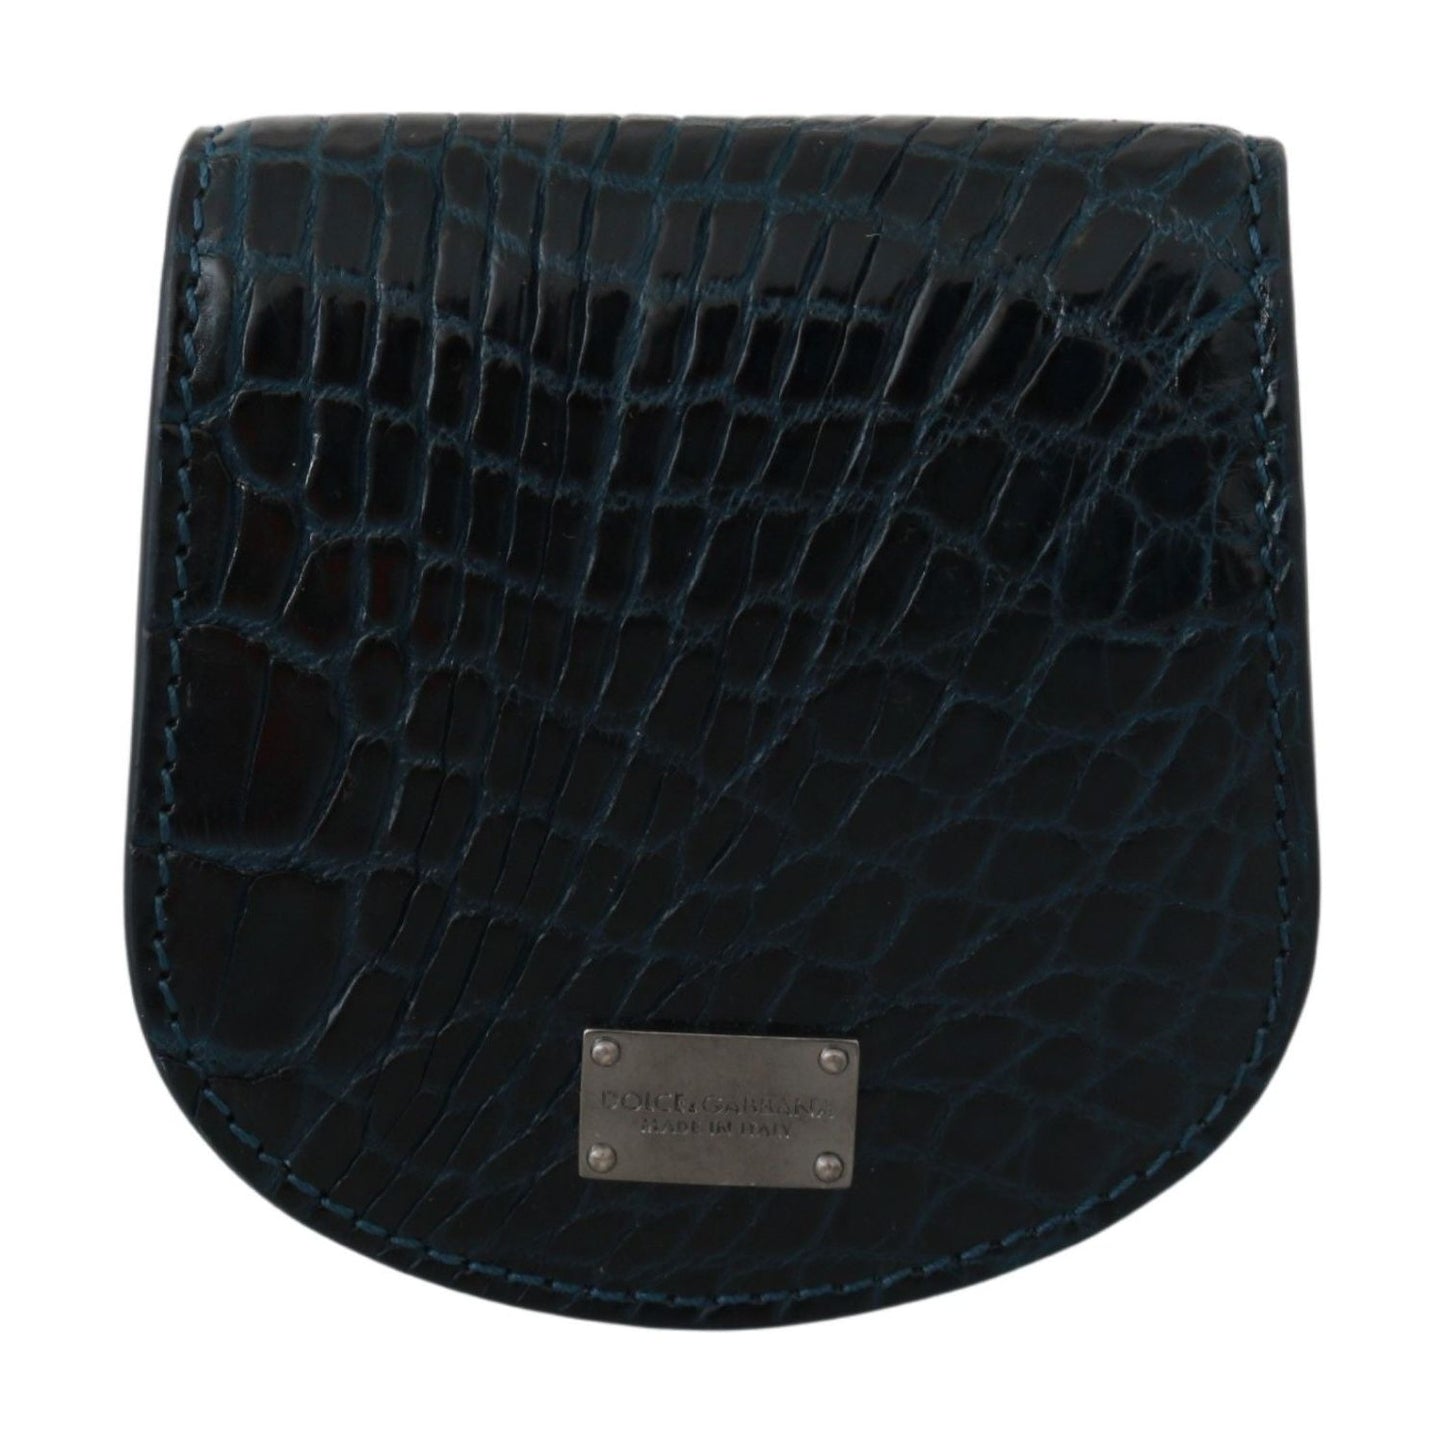 Dolce & Gabbana Exquisite Dark Blue Coin Case Wallet Condom Case blue-exotic-skins-condom-case-holder-pocket IMG_0247-fe9d8d00-afb.jpg